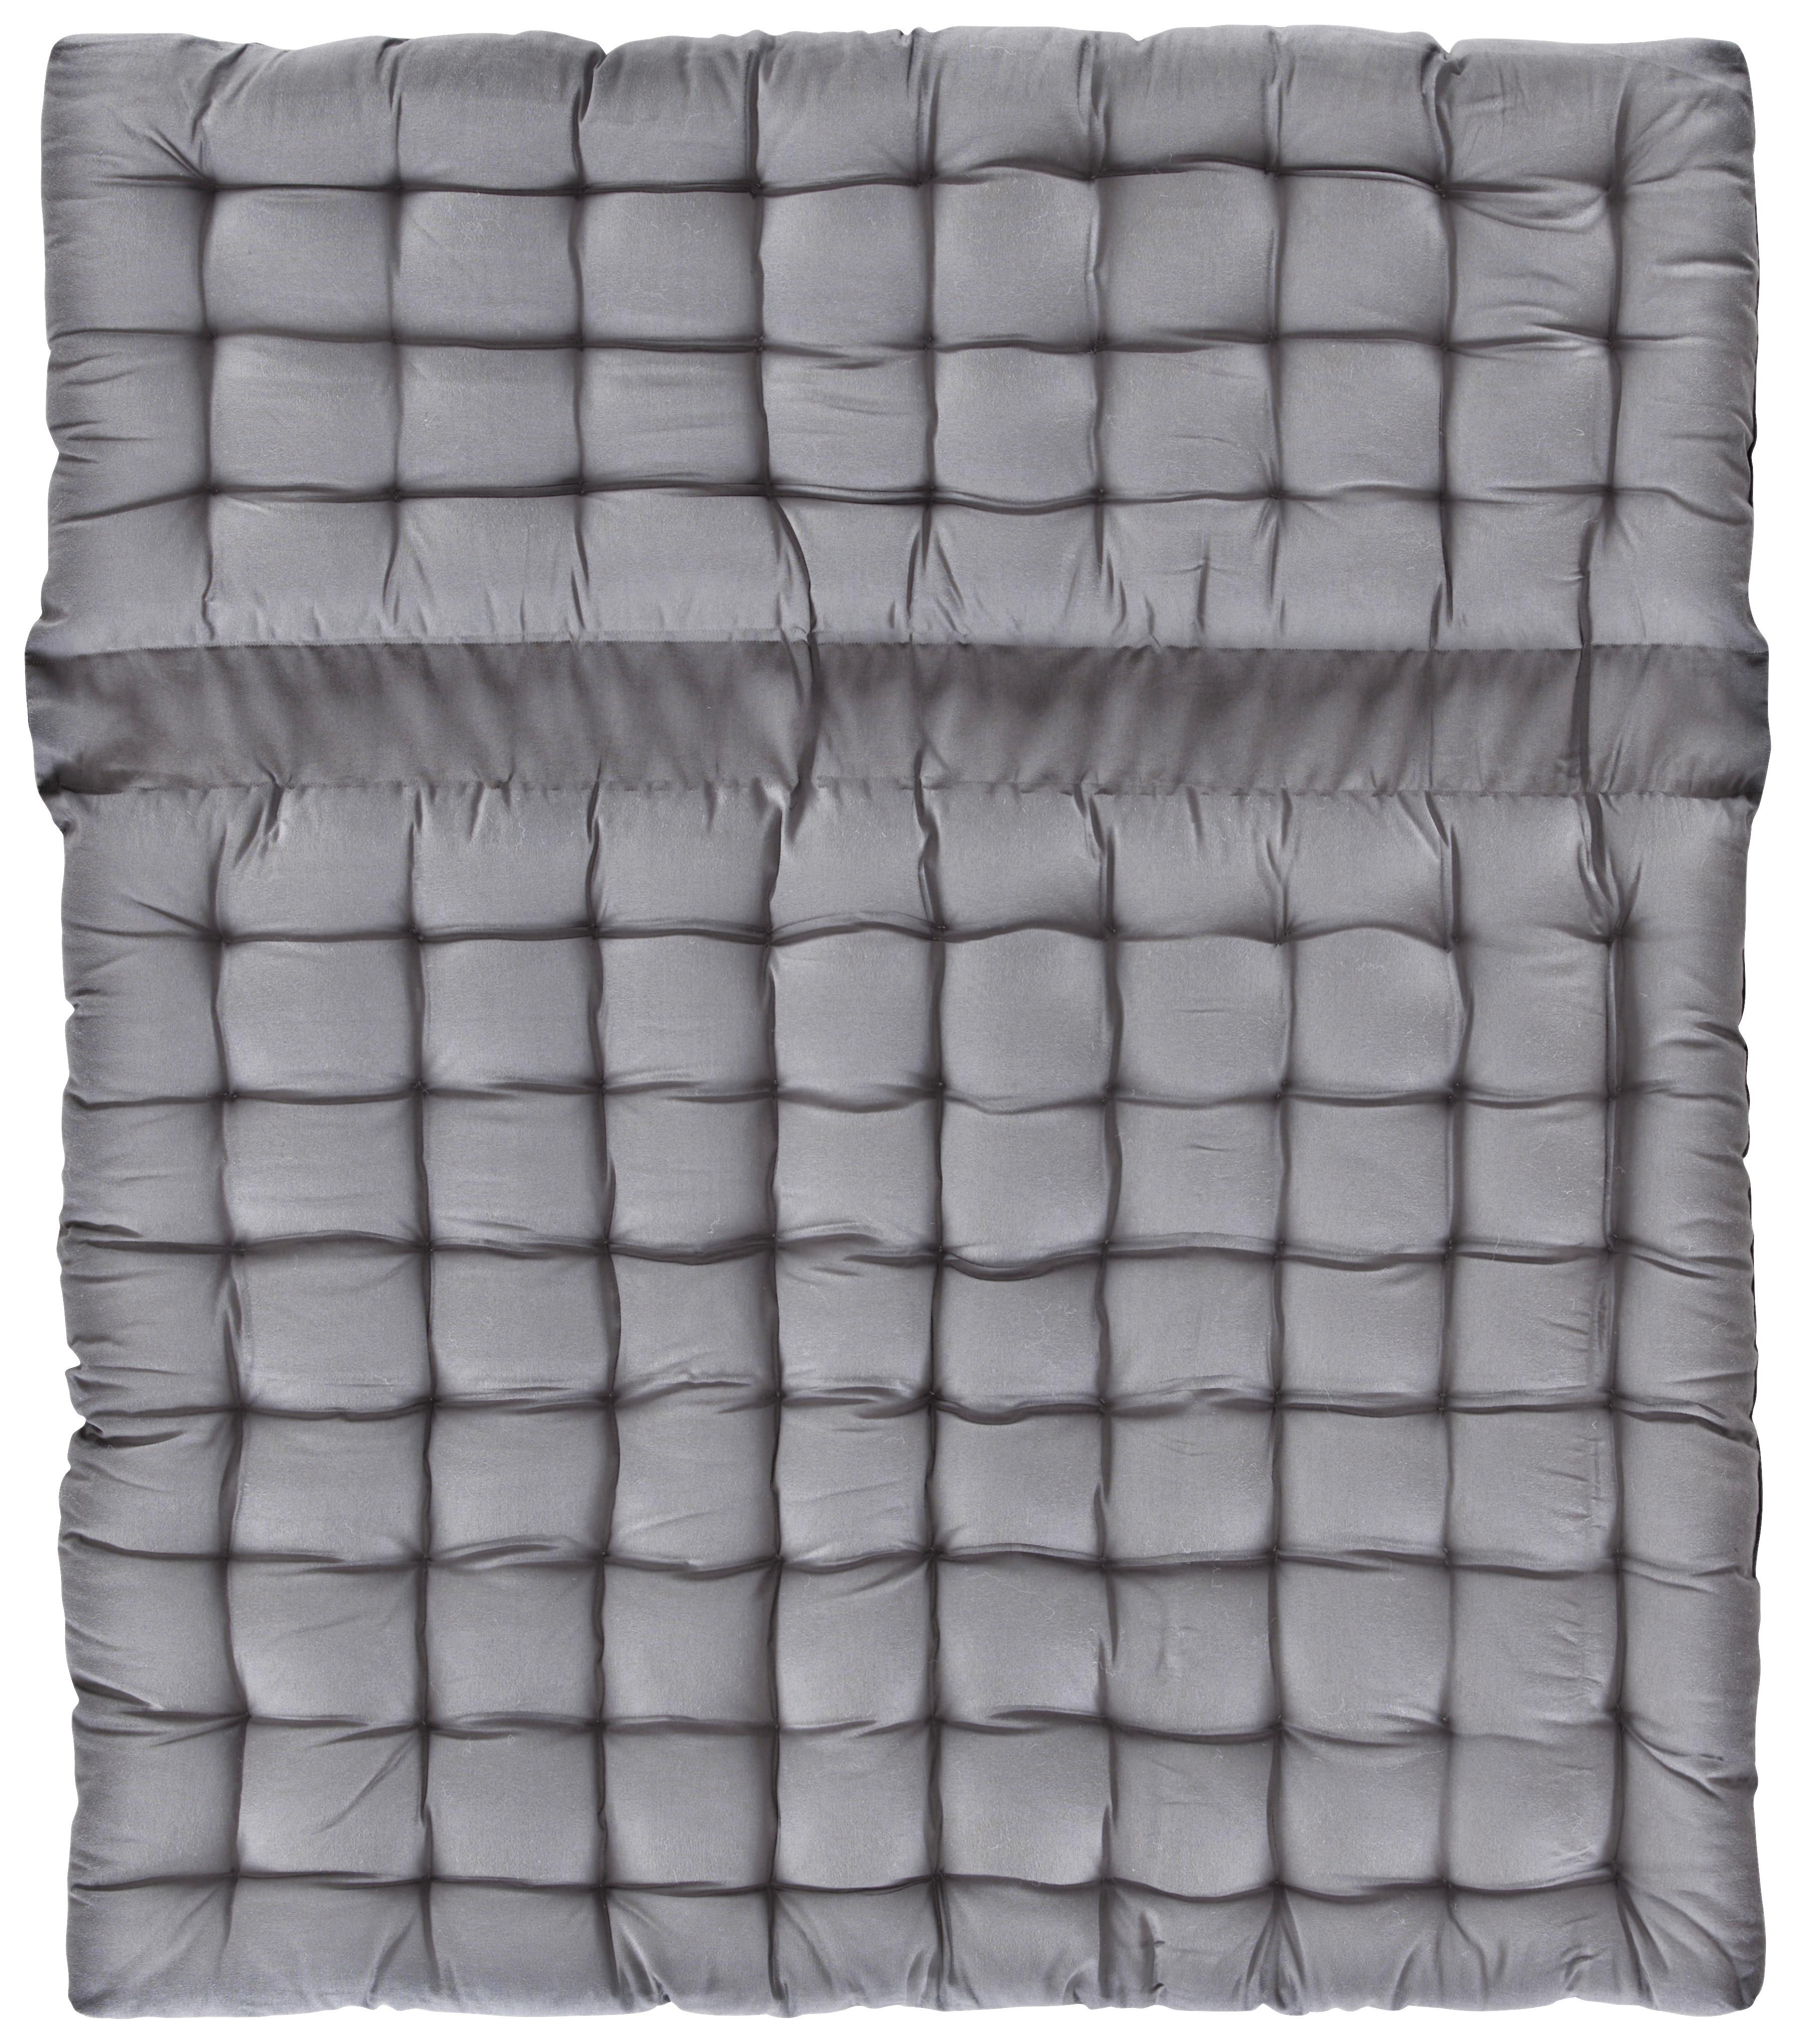 Palettenkissen Alex Pallet Pillow in Grau - Grau, Textil (114/74/10cm) - Based